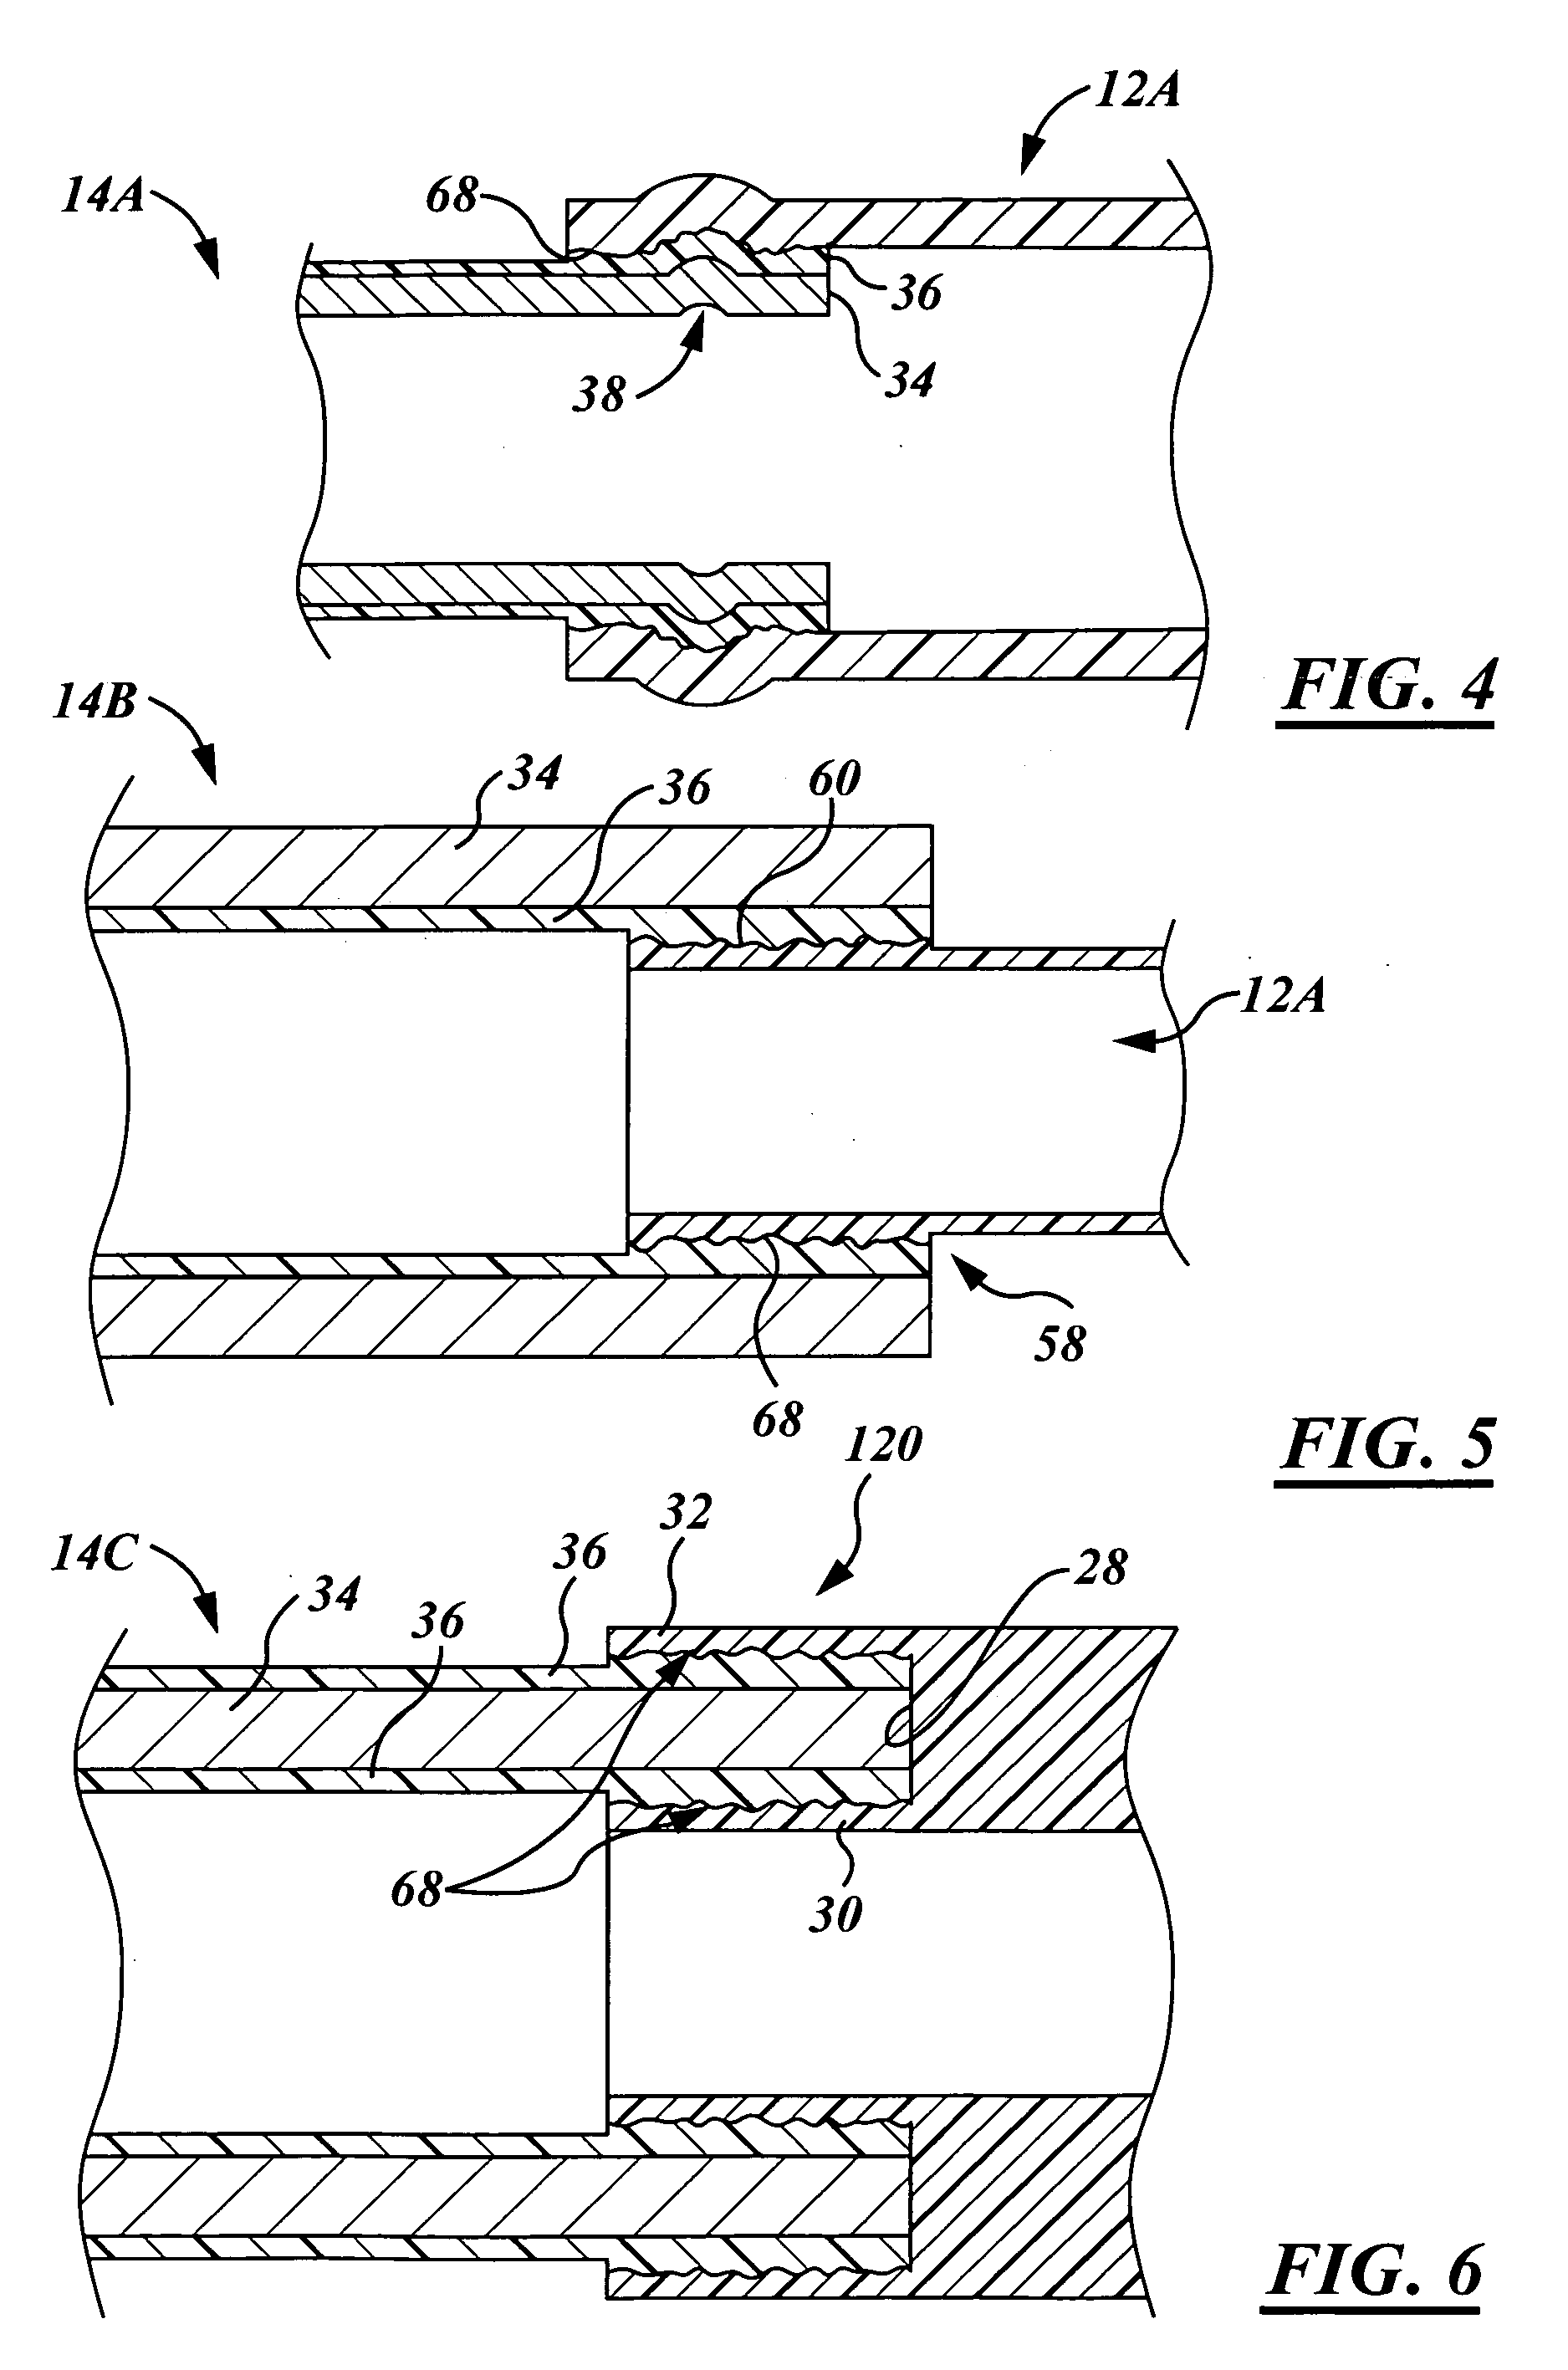 Method of coupling polymeric tubing to polymeric coated metal tubing